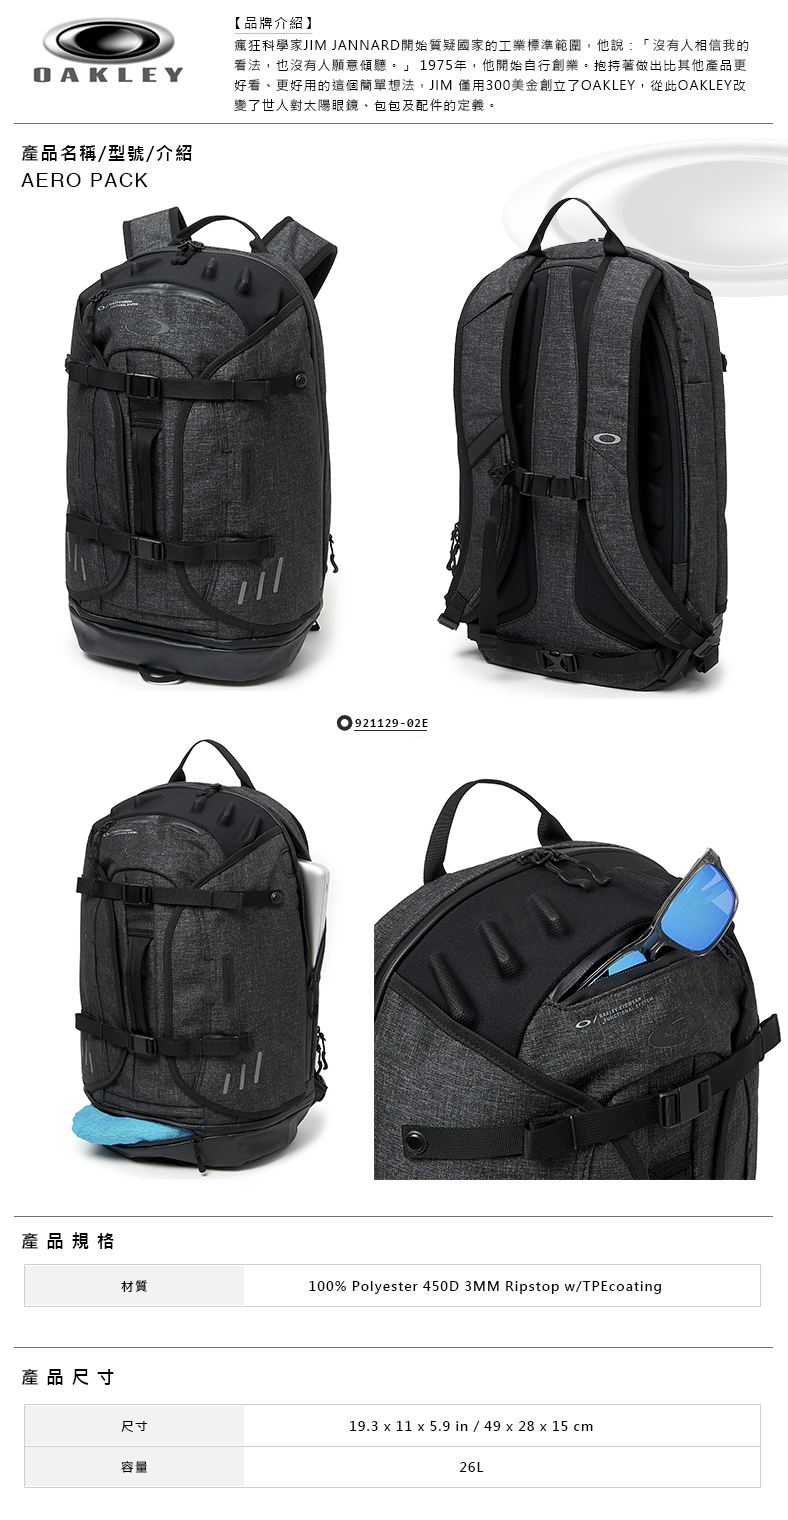 oakley aero pack backpack